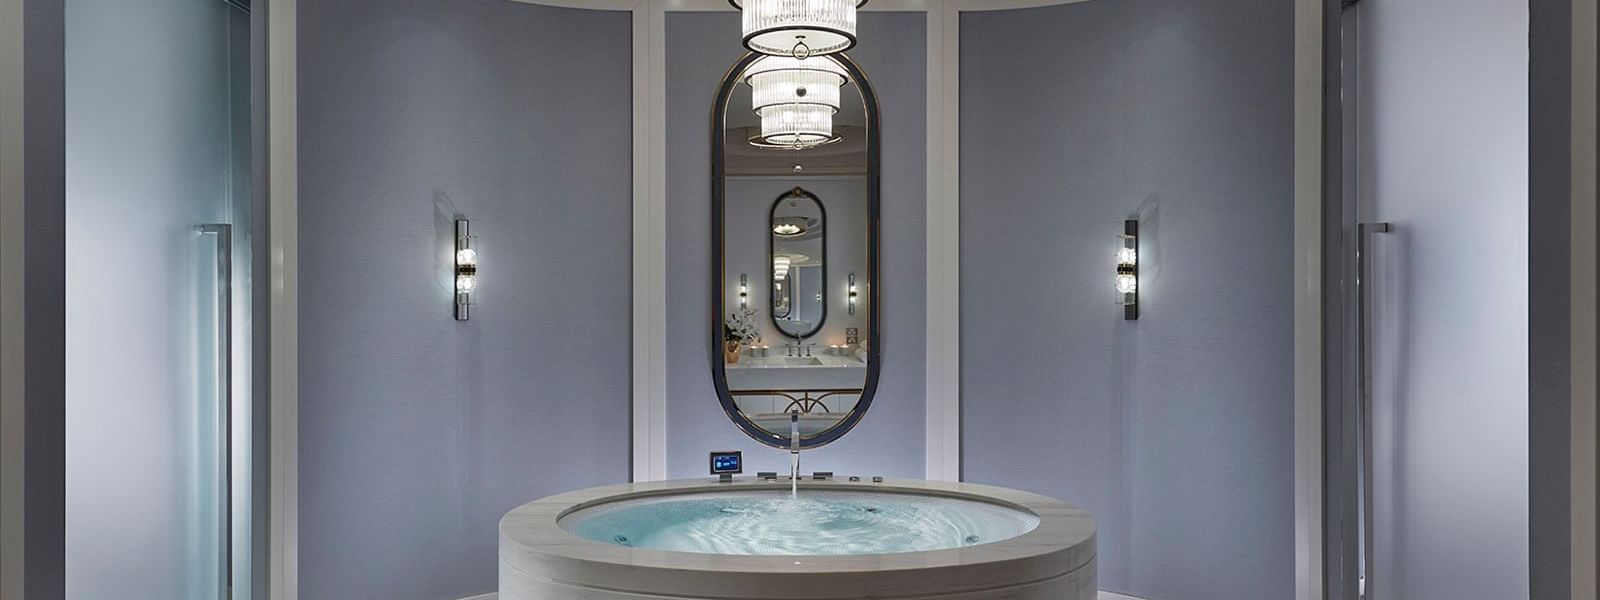 Bathtub & chandelier in Crown Spa at Crown Hotel Perth